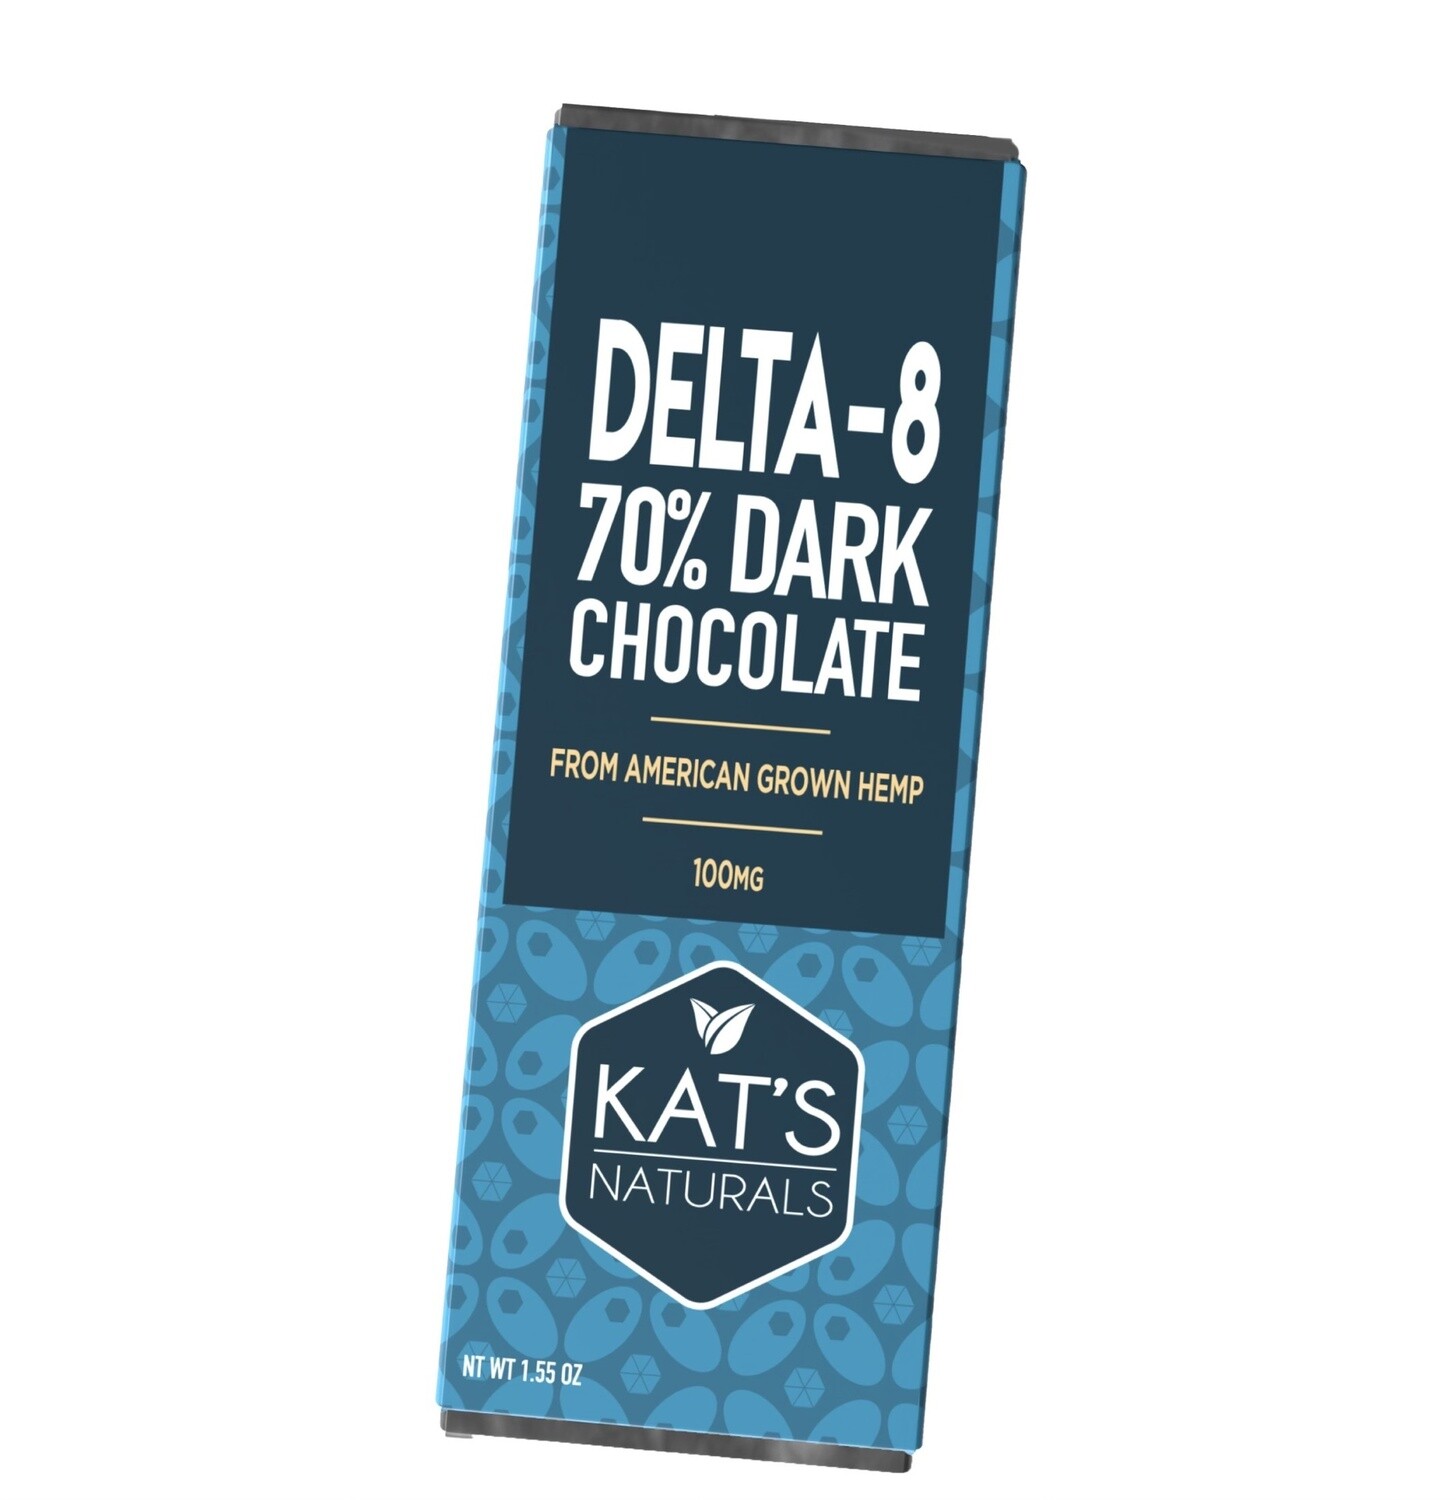 Kat’s Naturals Delta 8 70% Dark Chocolate Bar